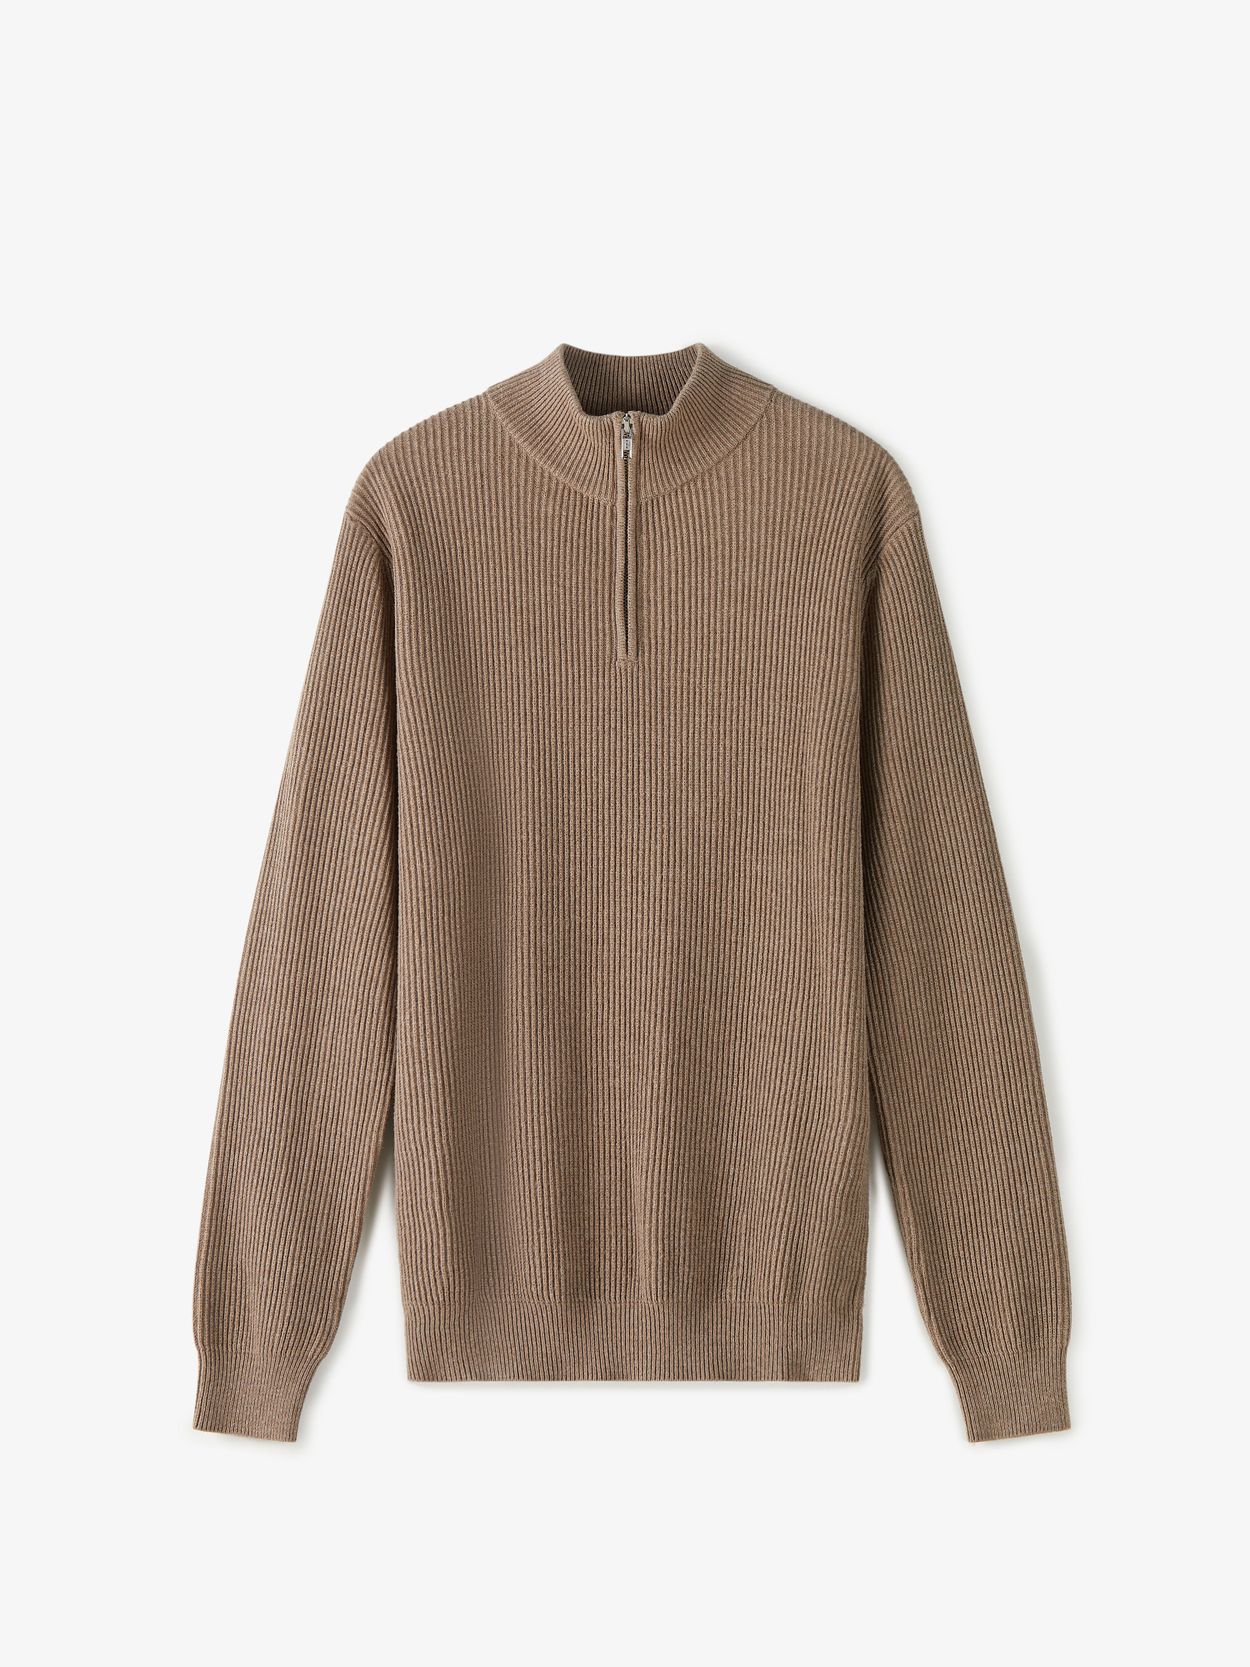 Beige Zipper Sweater